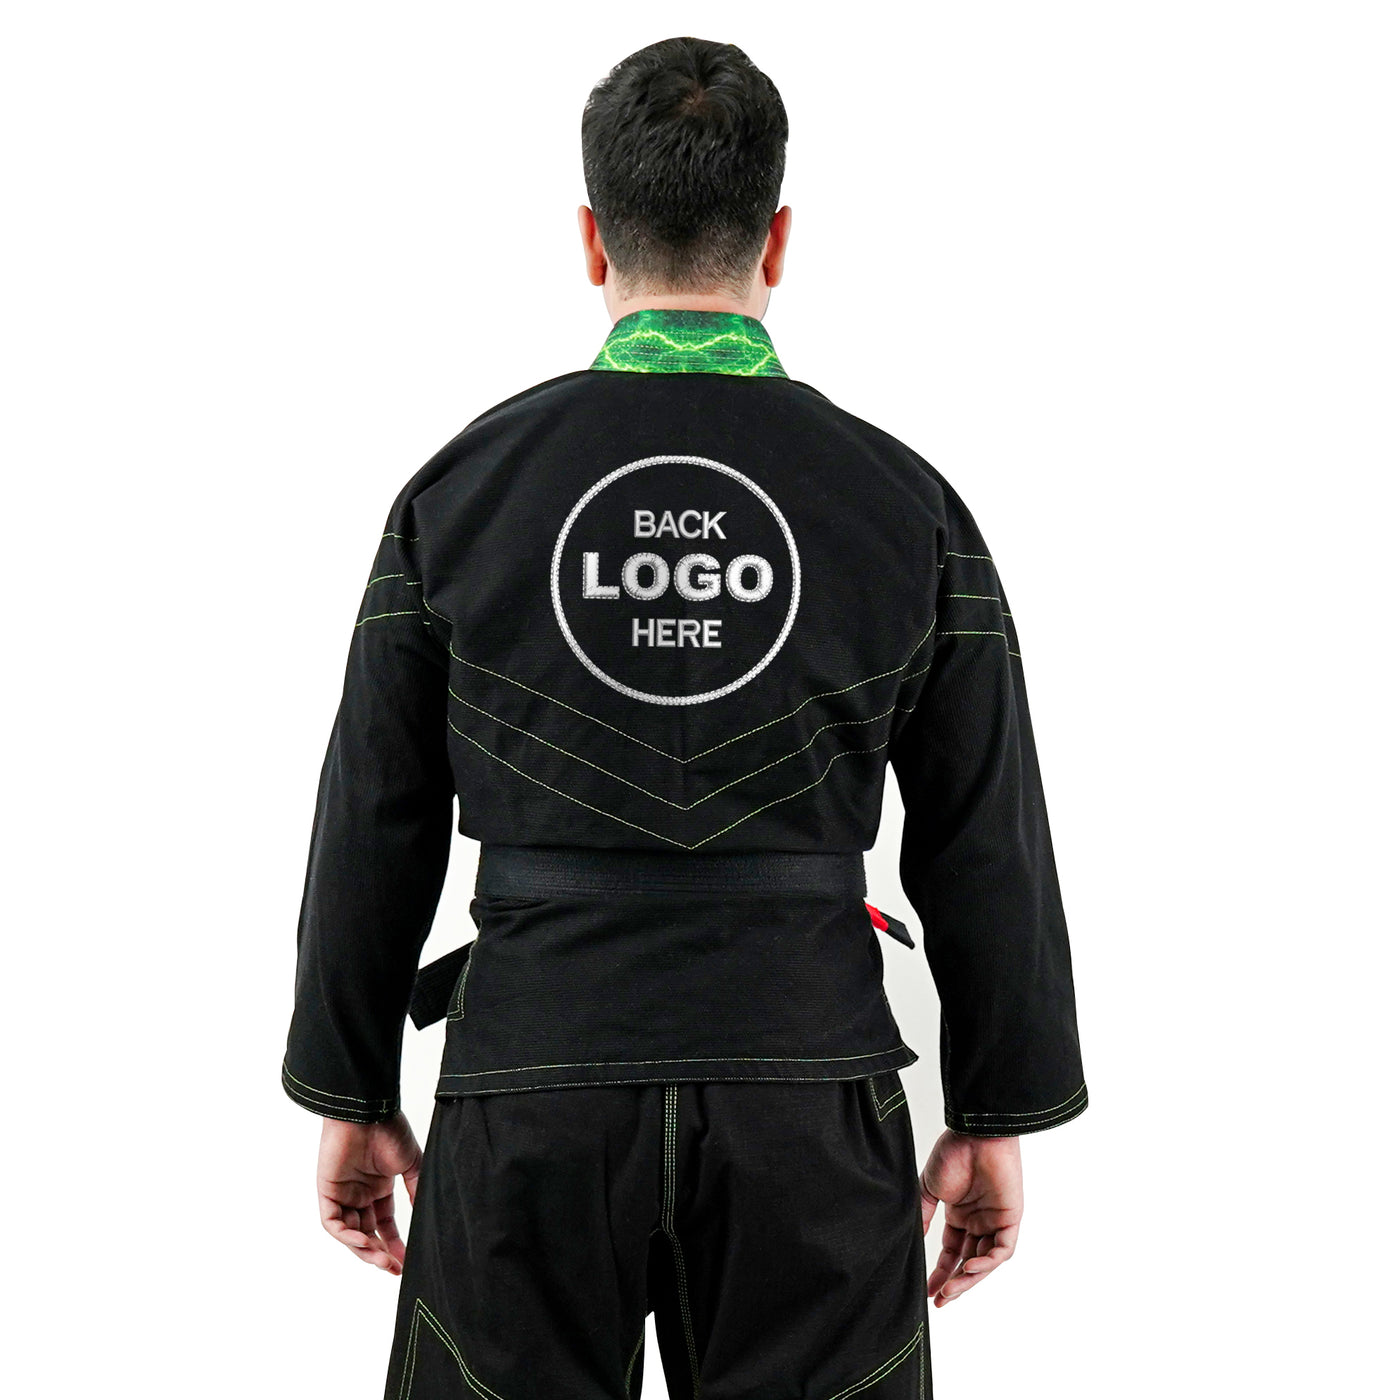 Premium Customized Logo Black with Thunder Neon Brazilian Jiu Jitsu Gi